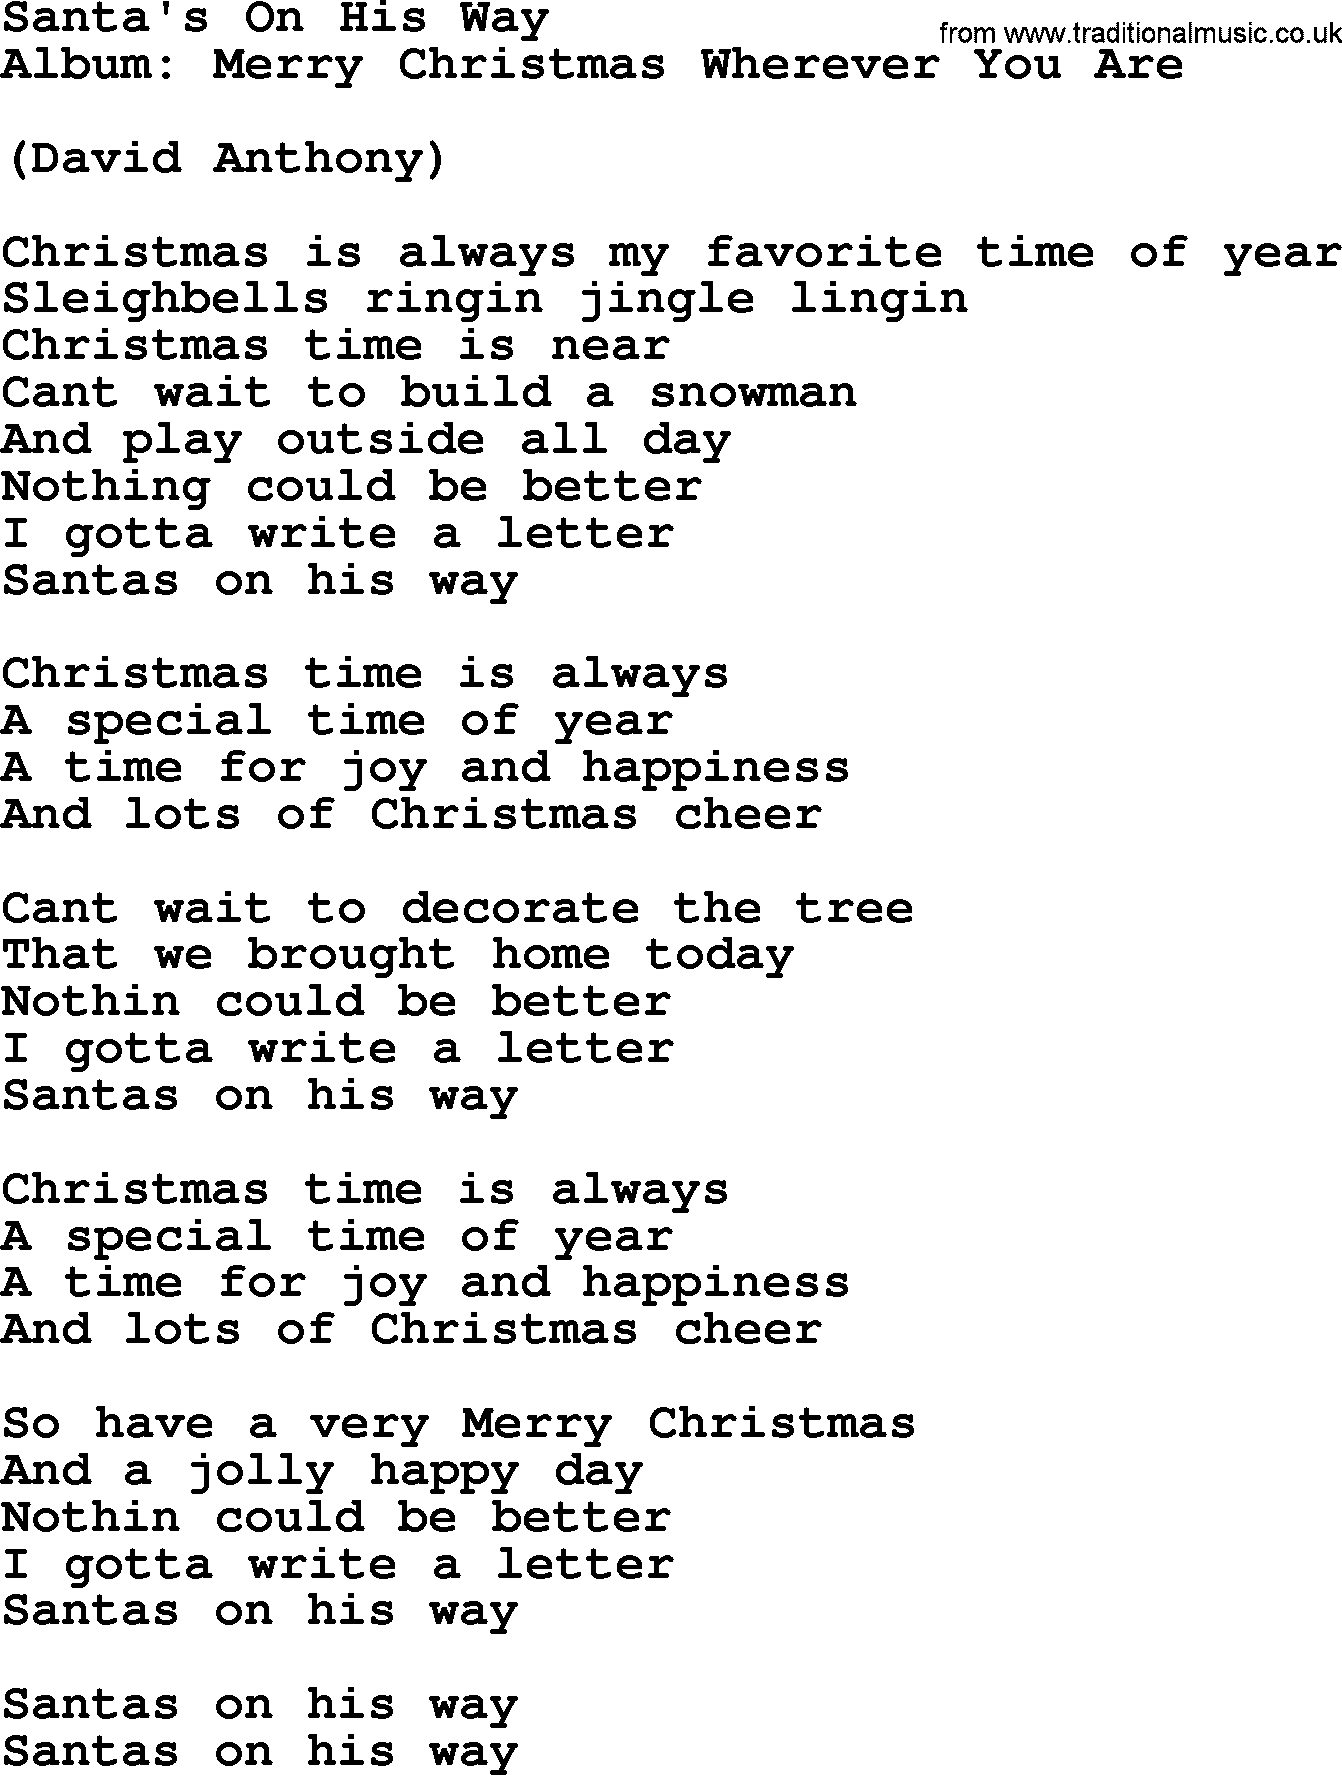 George Strait song: Santa's On His Way, lyrics